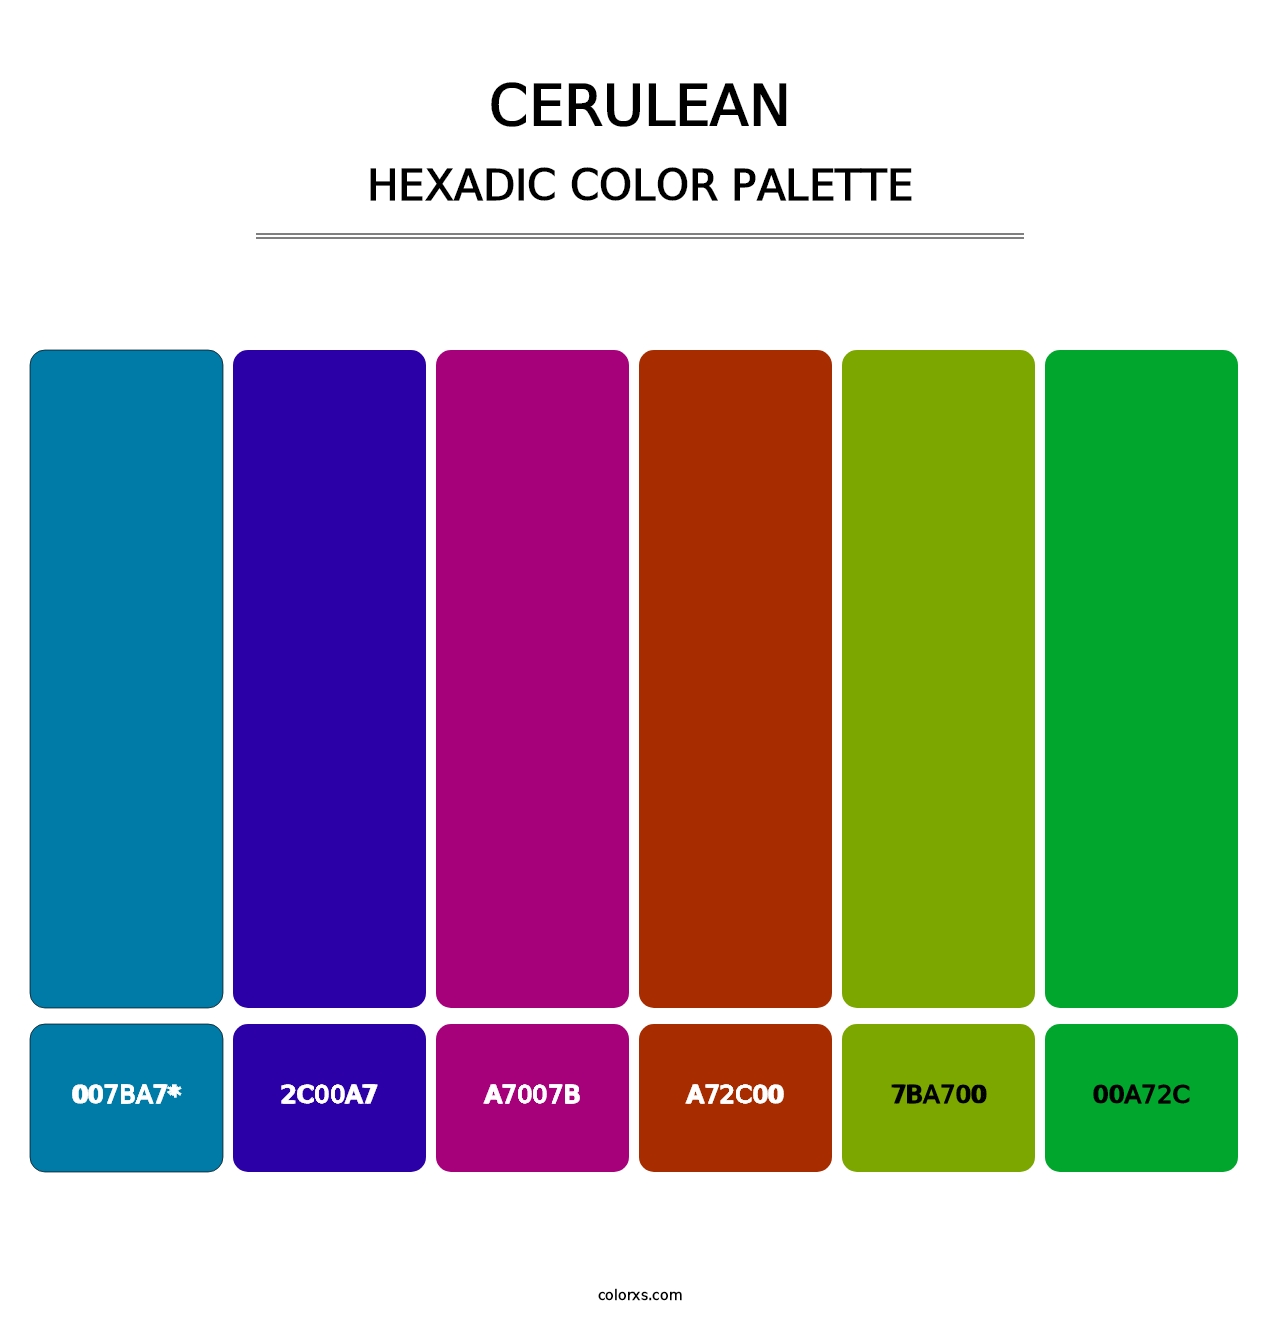 Cerulean - Hexadic Color Palette